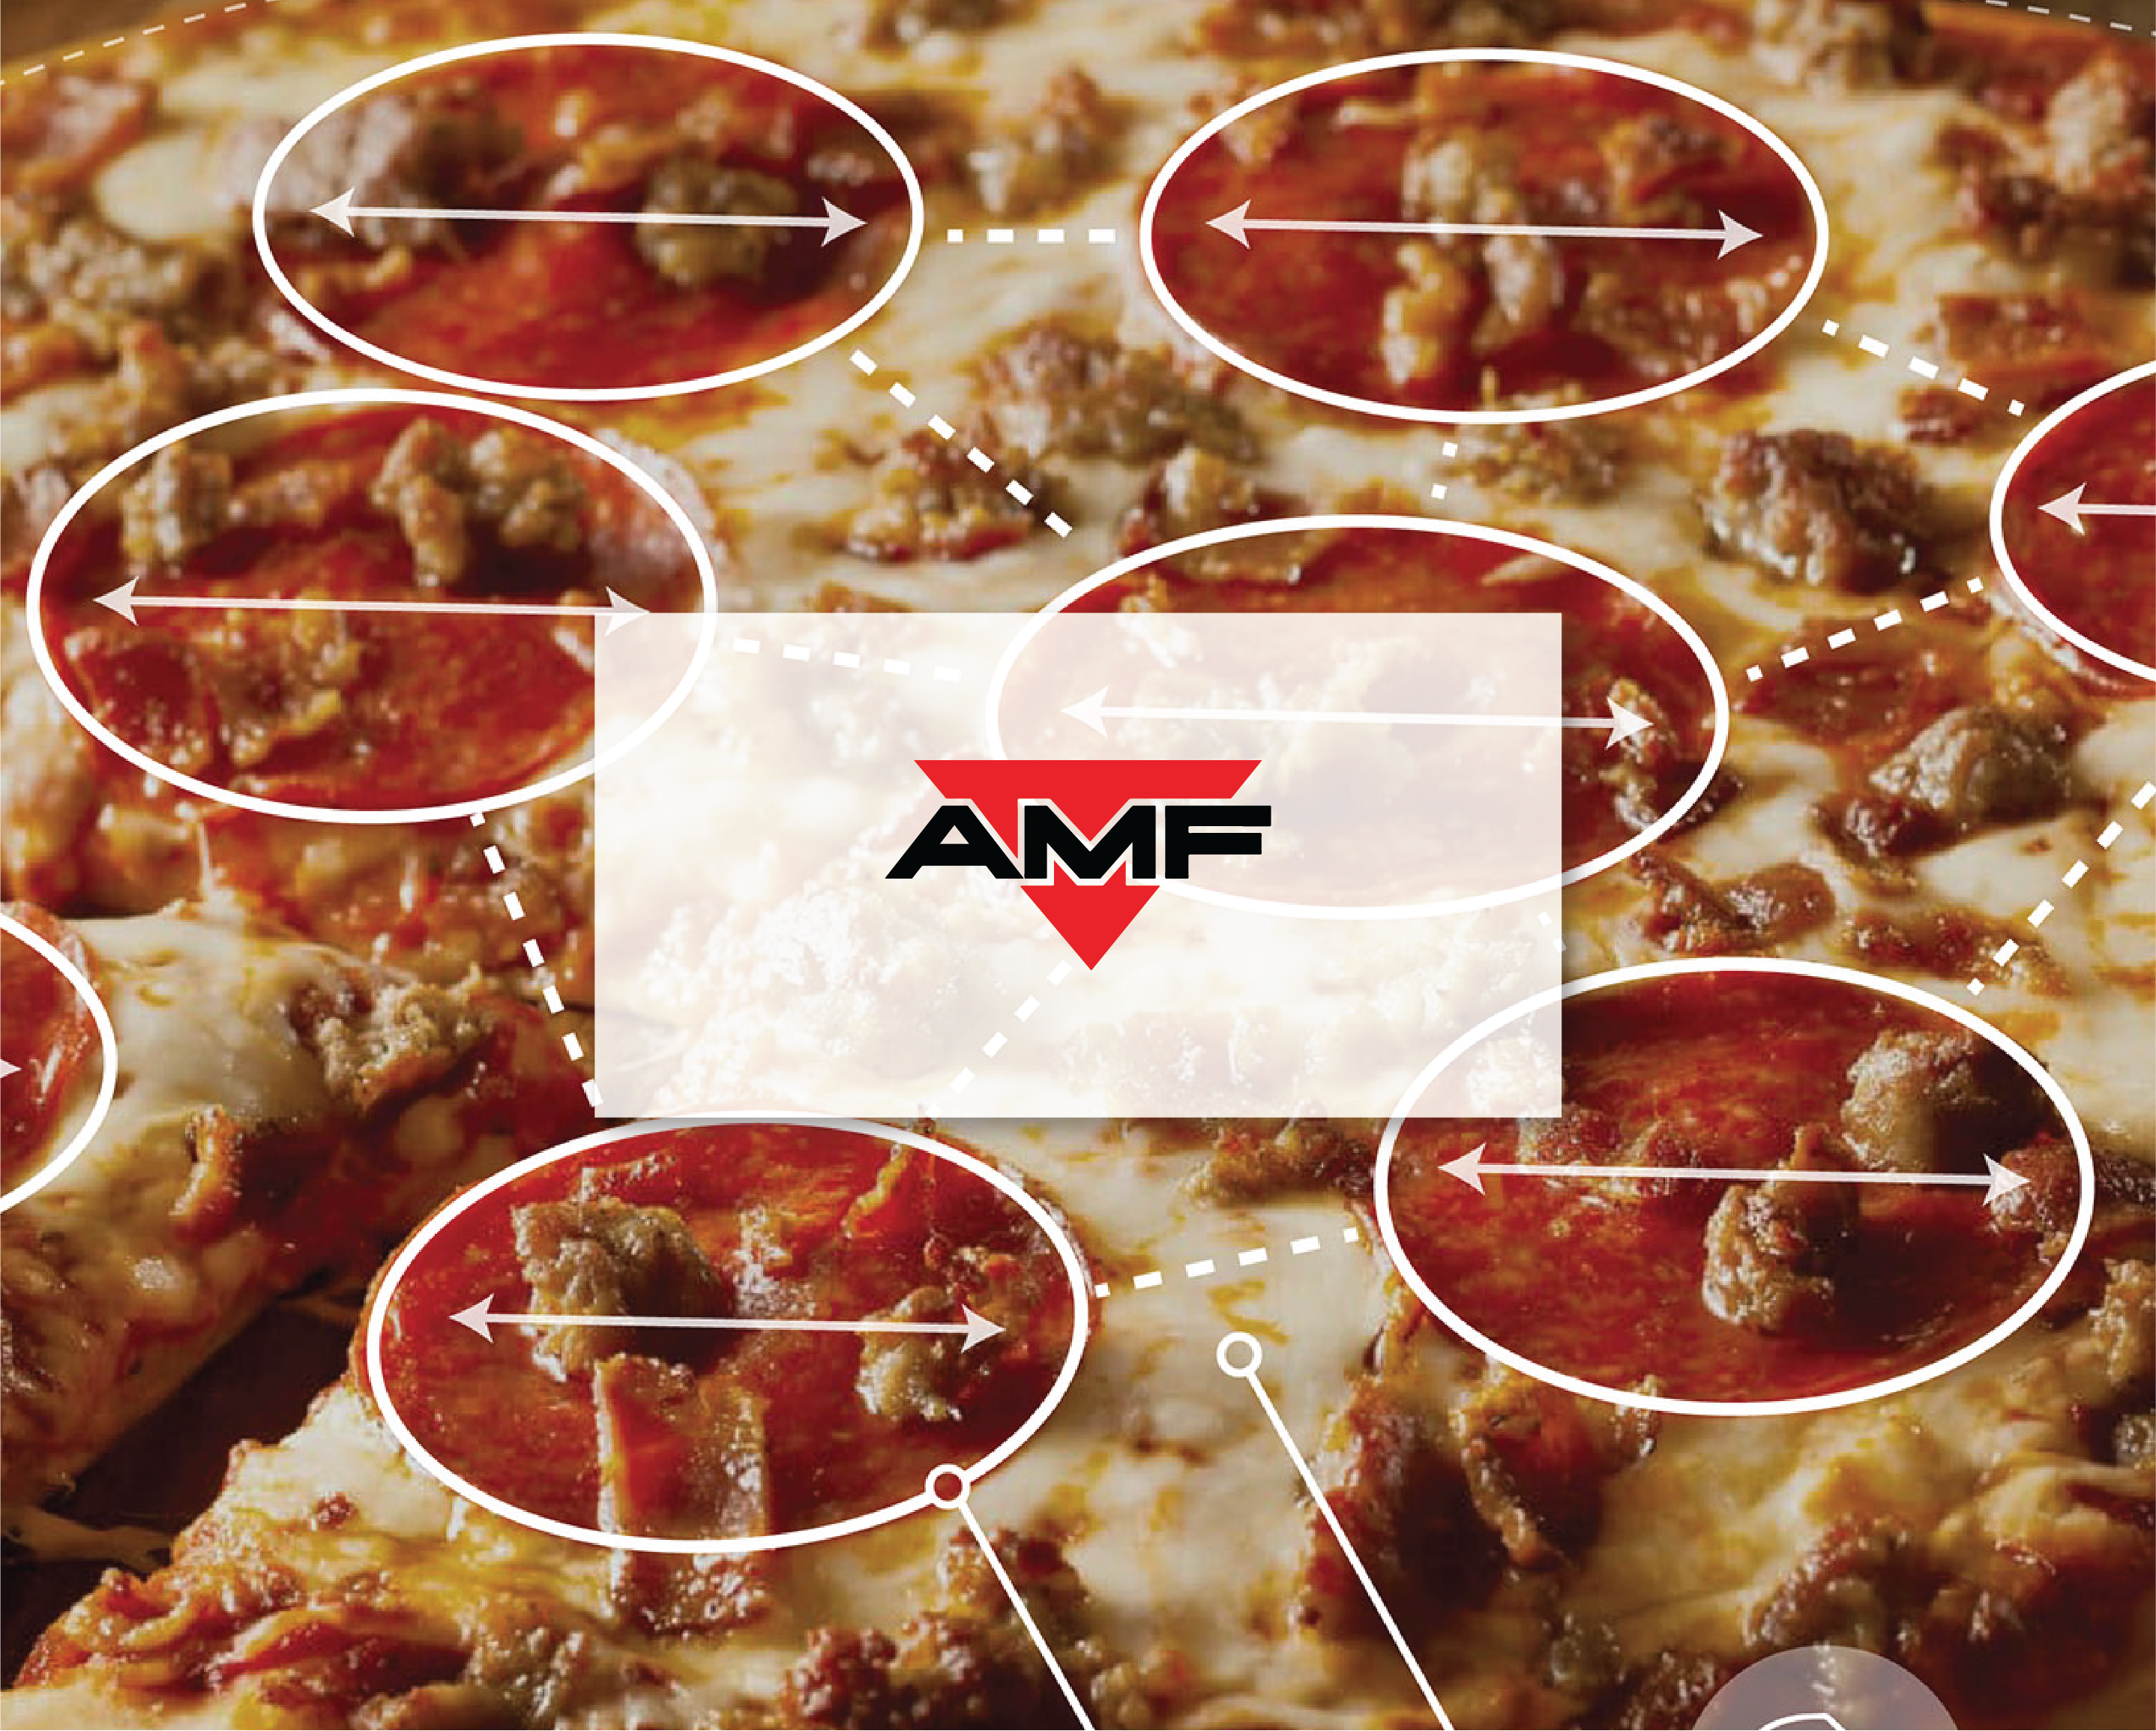 AMF: data-driven pizza production